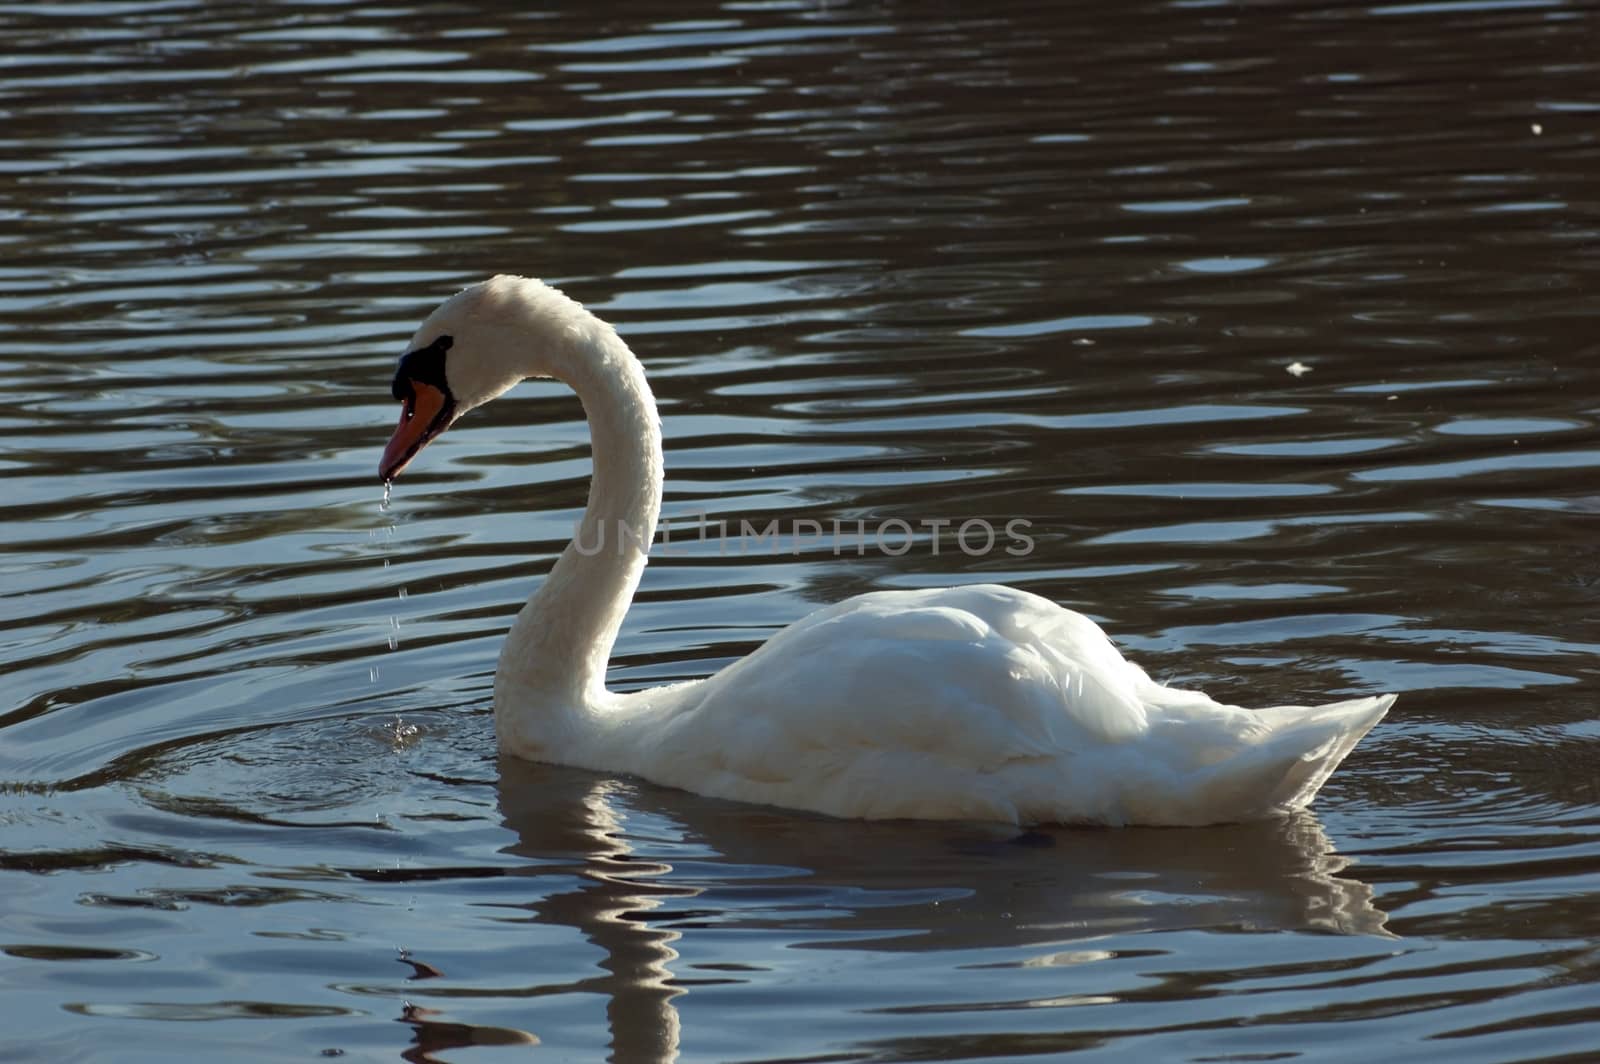 White swan on the dark water of pond